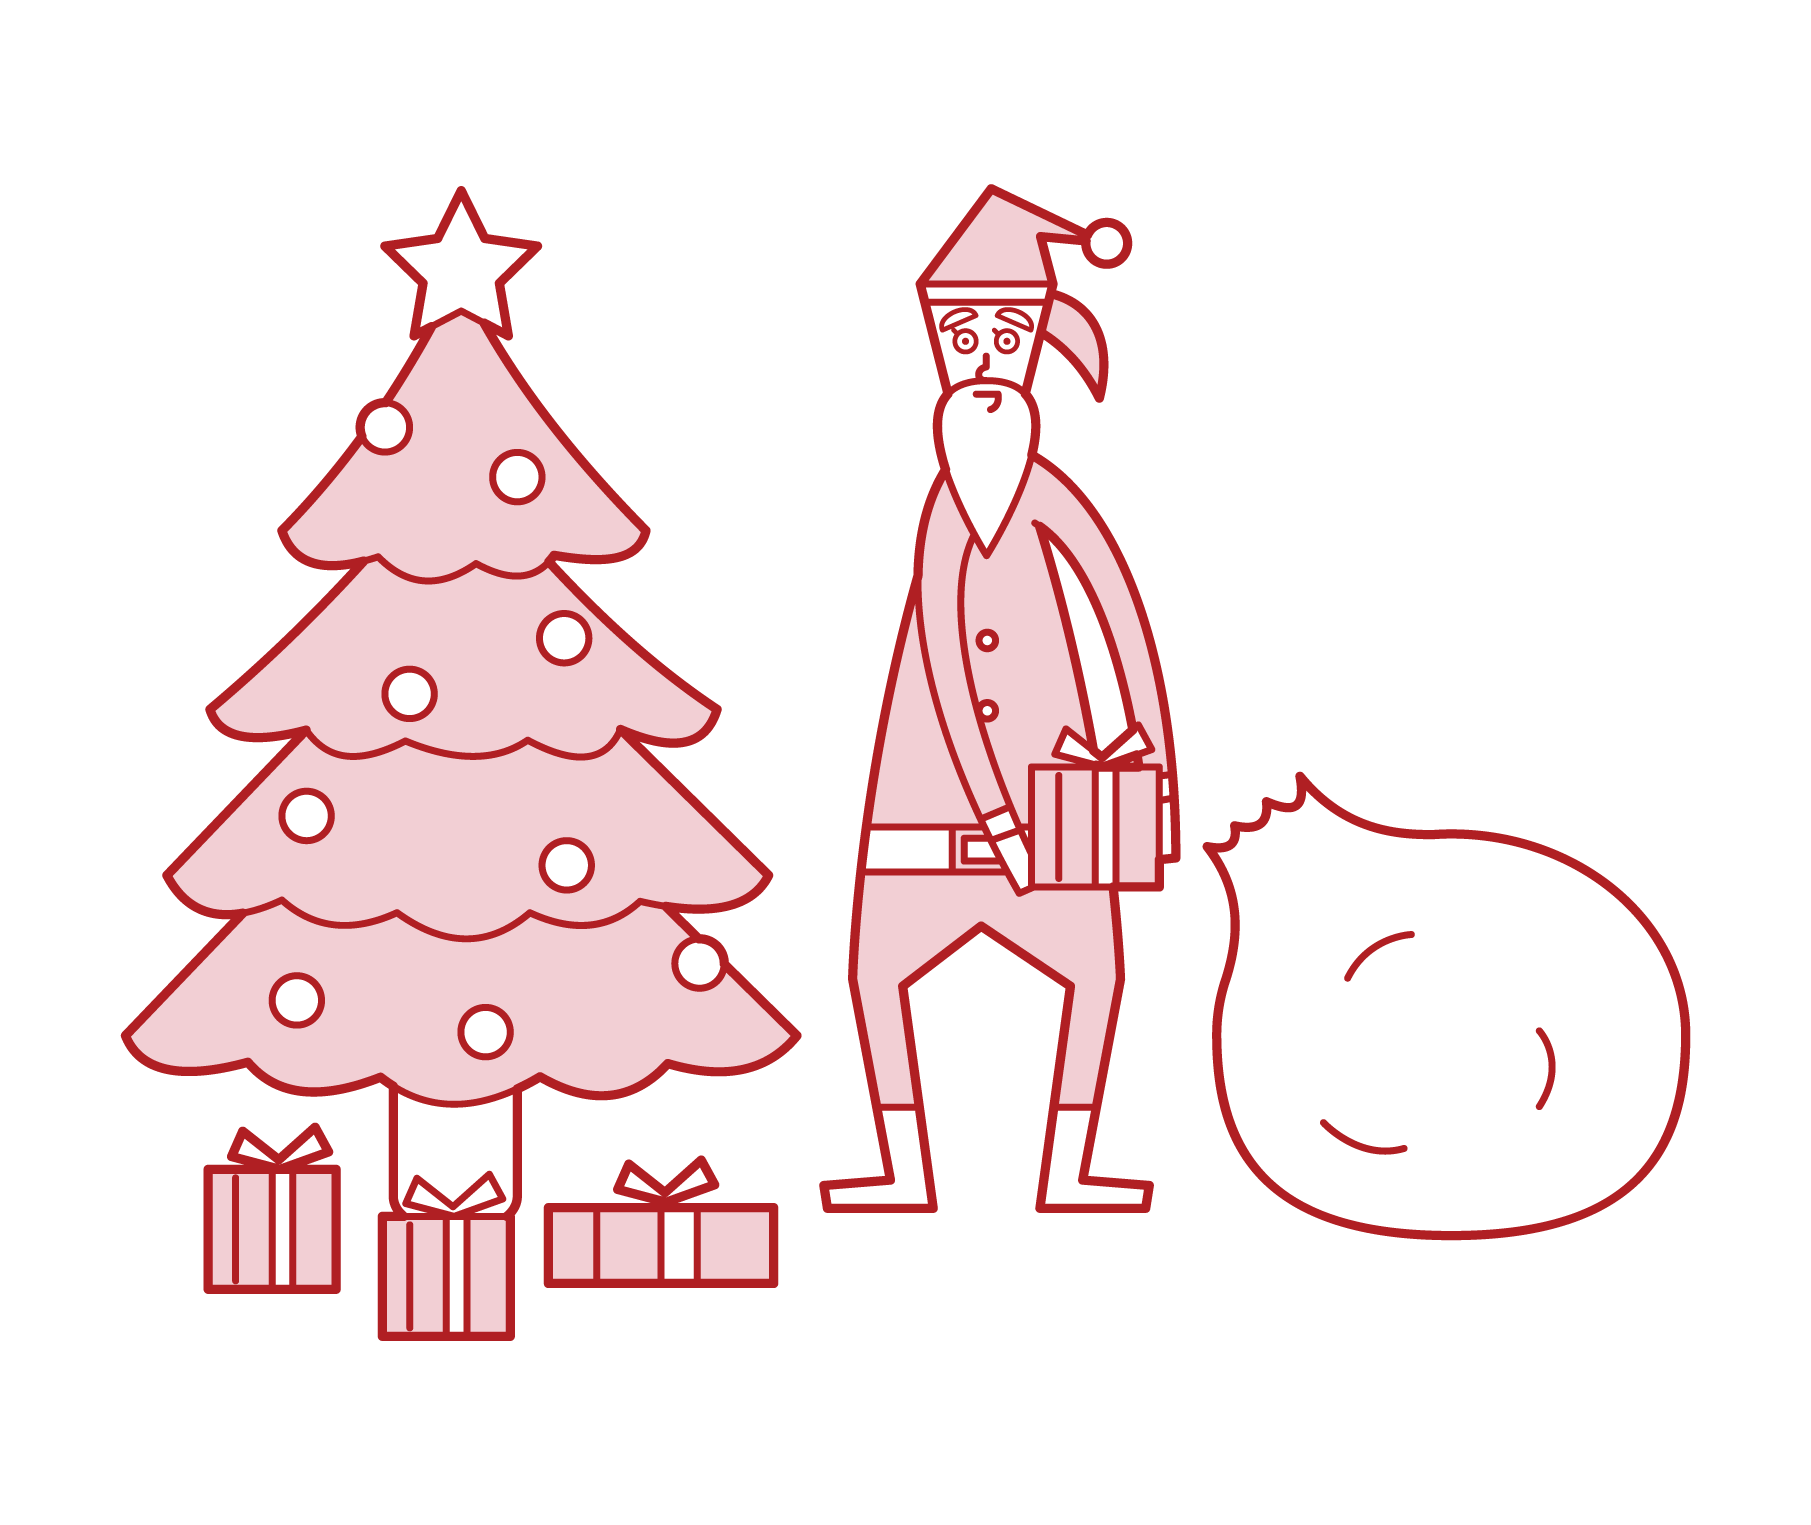 Illustration of Santa Claus (woman) arranging presents under a Christmas tree